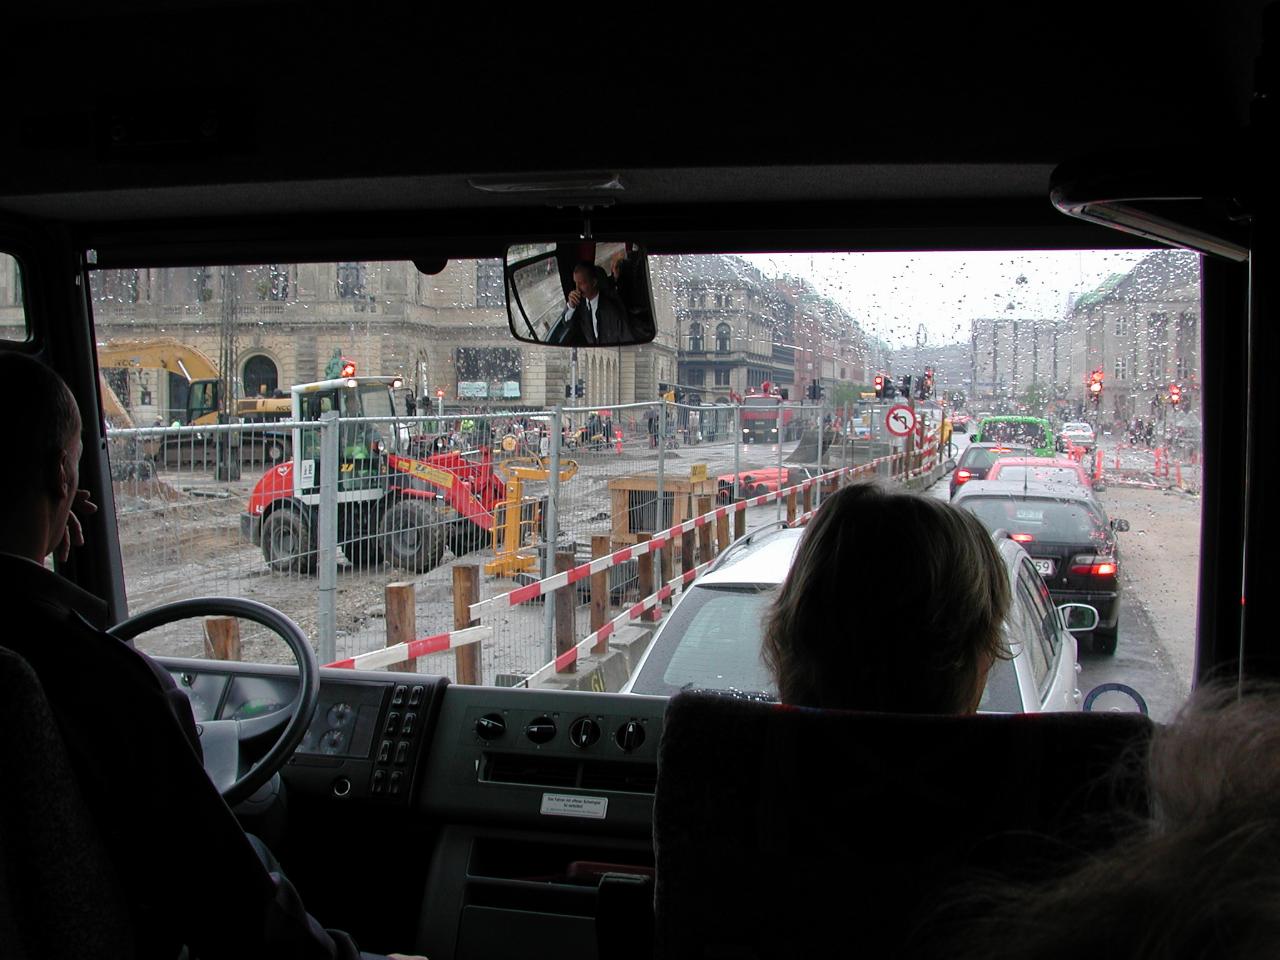 KPLU Viking Jazz: Traffic congestion at construction site in Copenhagen